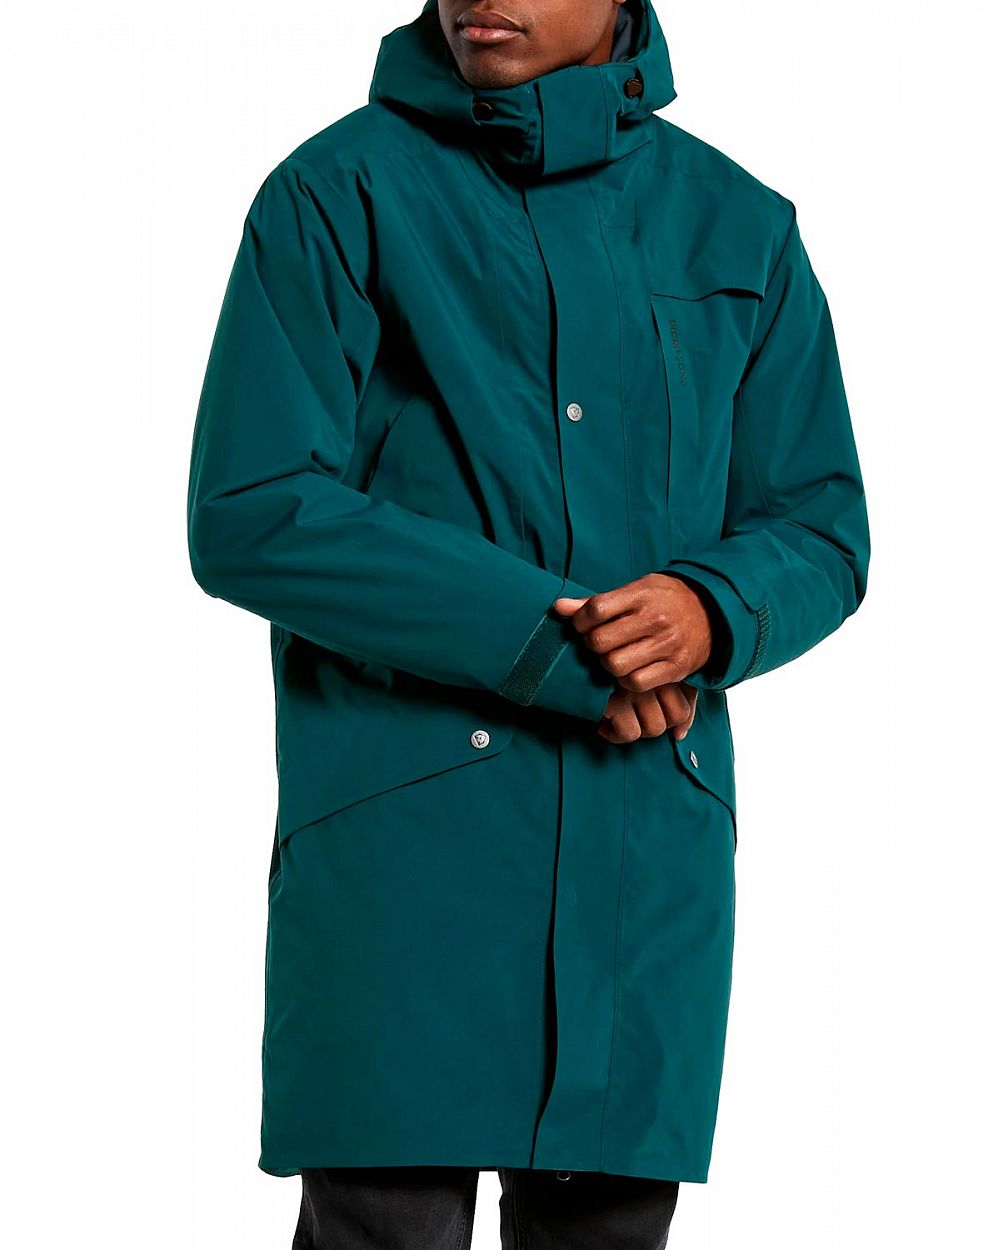 Куртка водонепроницаемая демисезонная Didriksons Stern Green отзывы